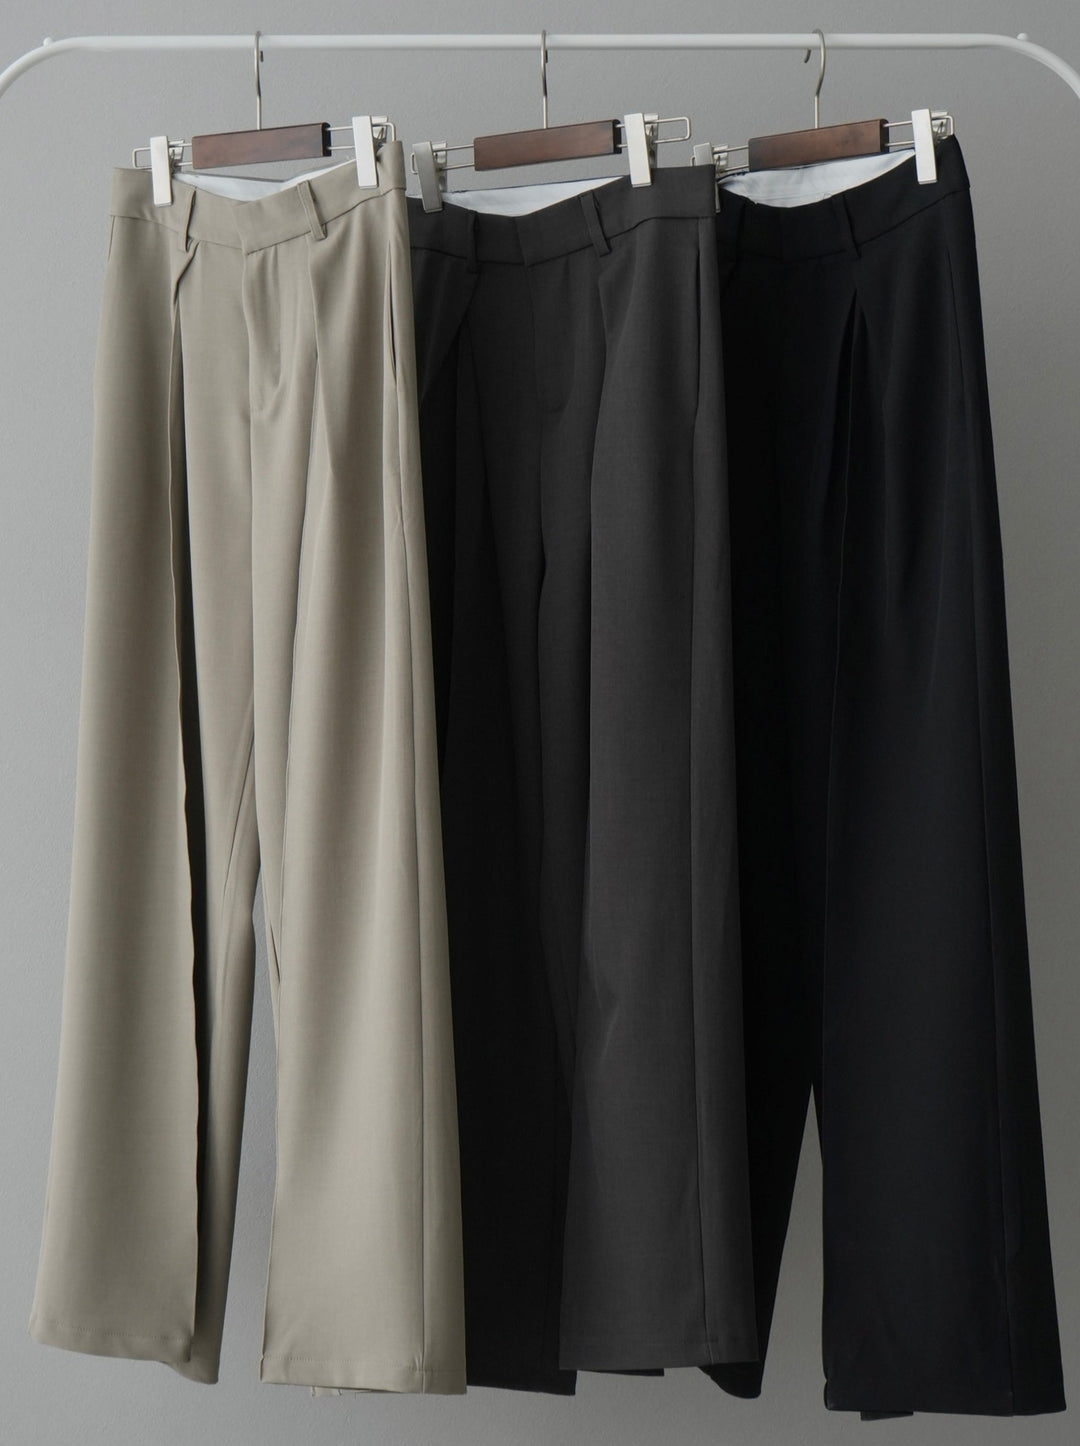 [SET] Big cuff sheer washer shirt + design tuck wide pants (2set)